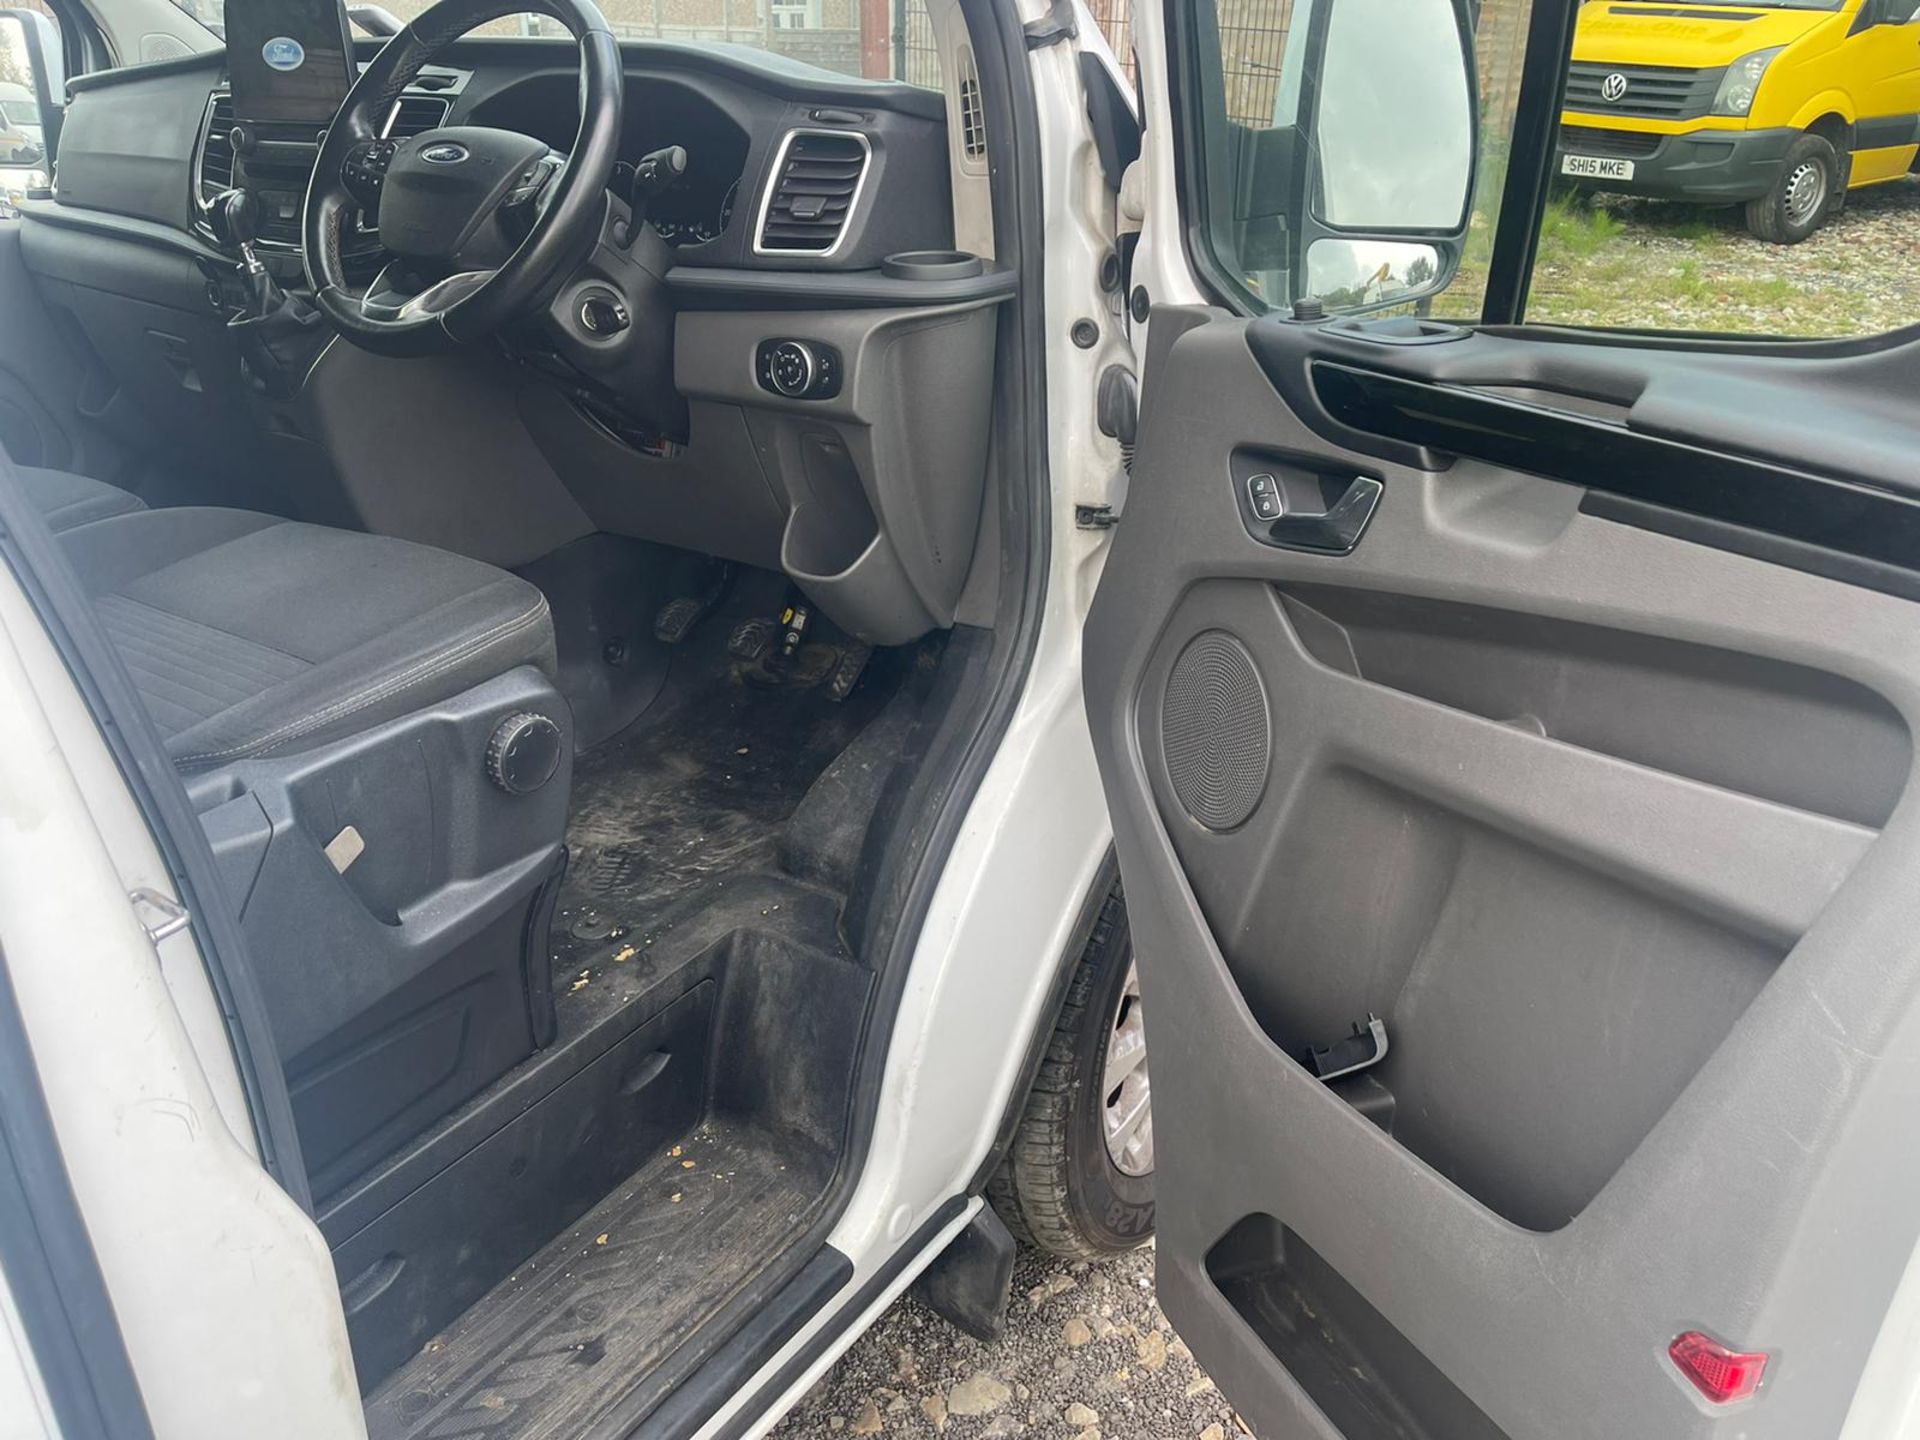 2019 ford custom transit van - Image 6 of 7